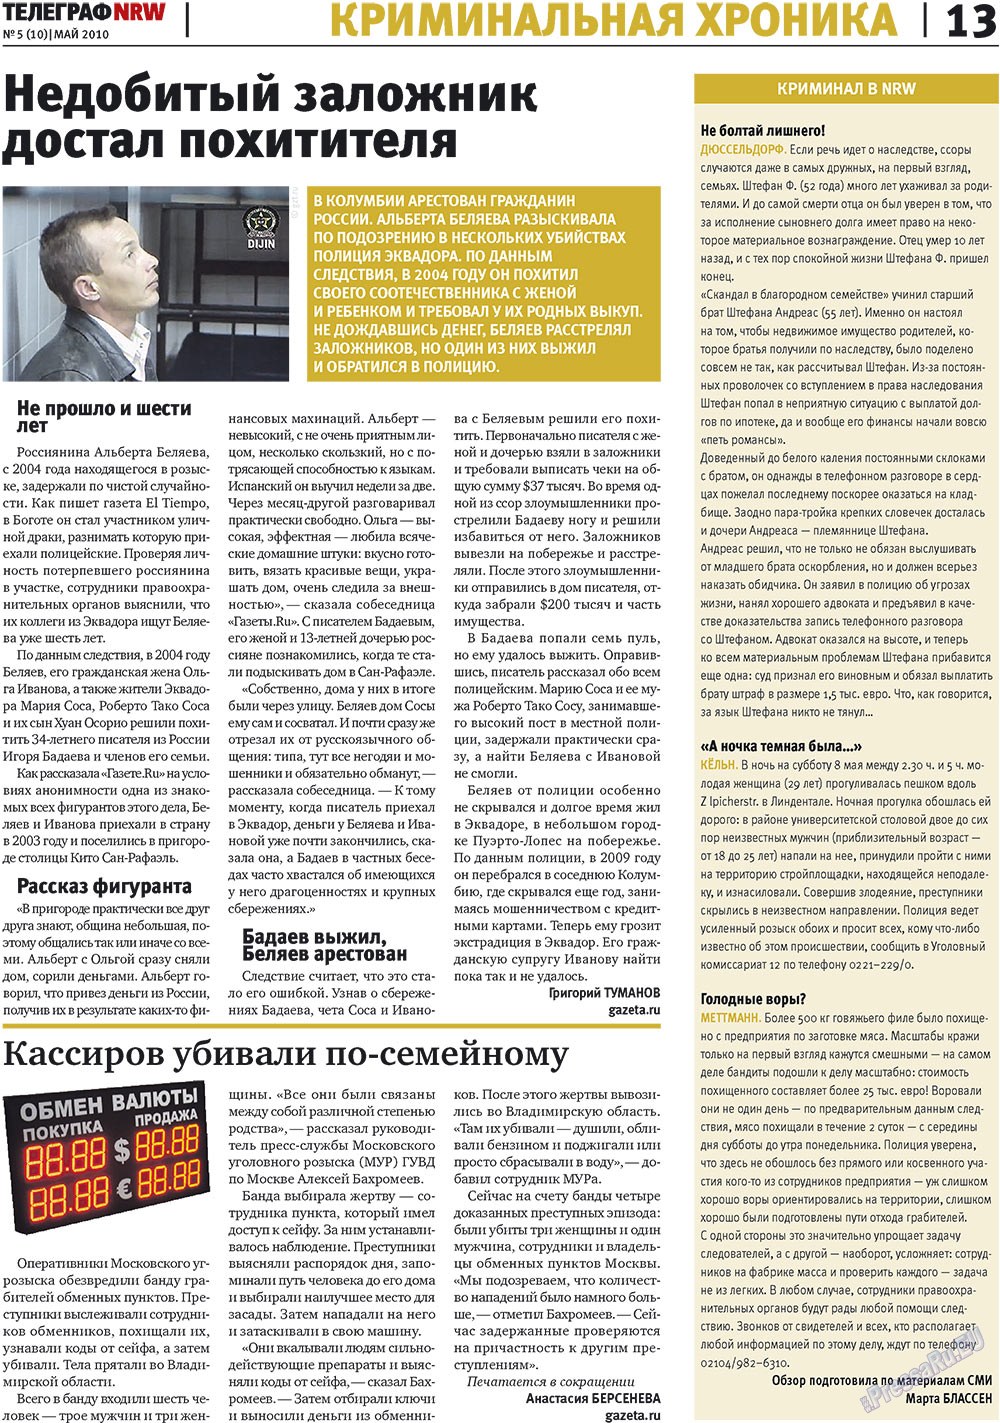 Телеграф NRW, газета. 2010 №5 стр.13